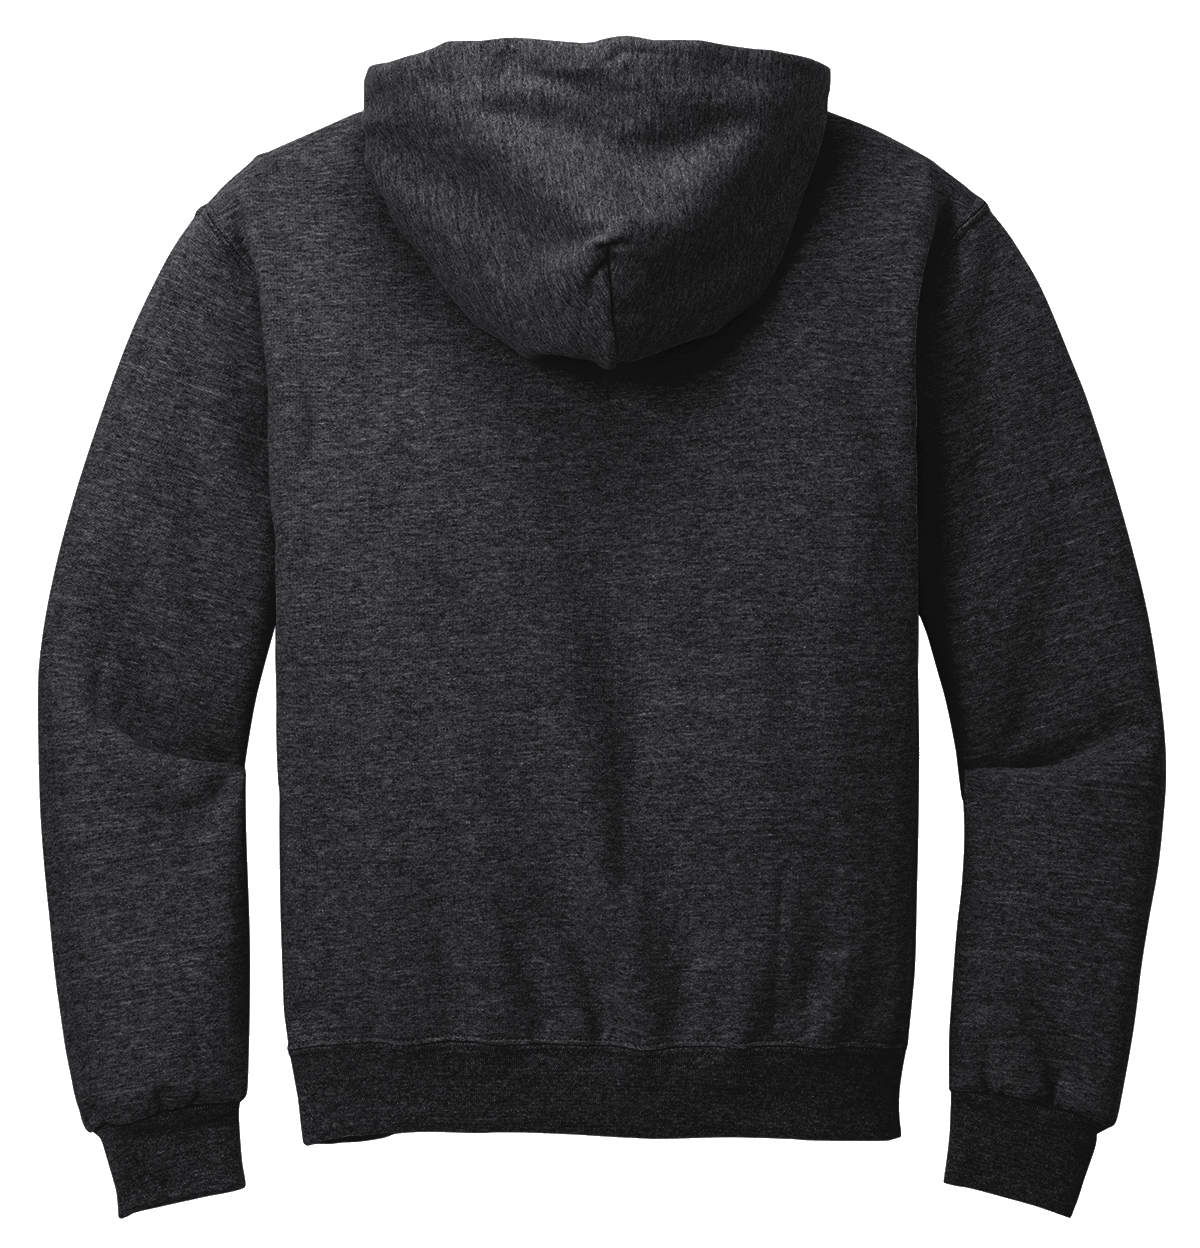 Pullover Hooded Sweatshirt Black Heather